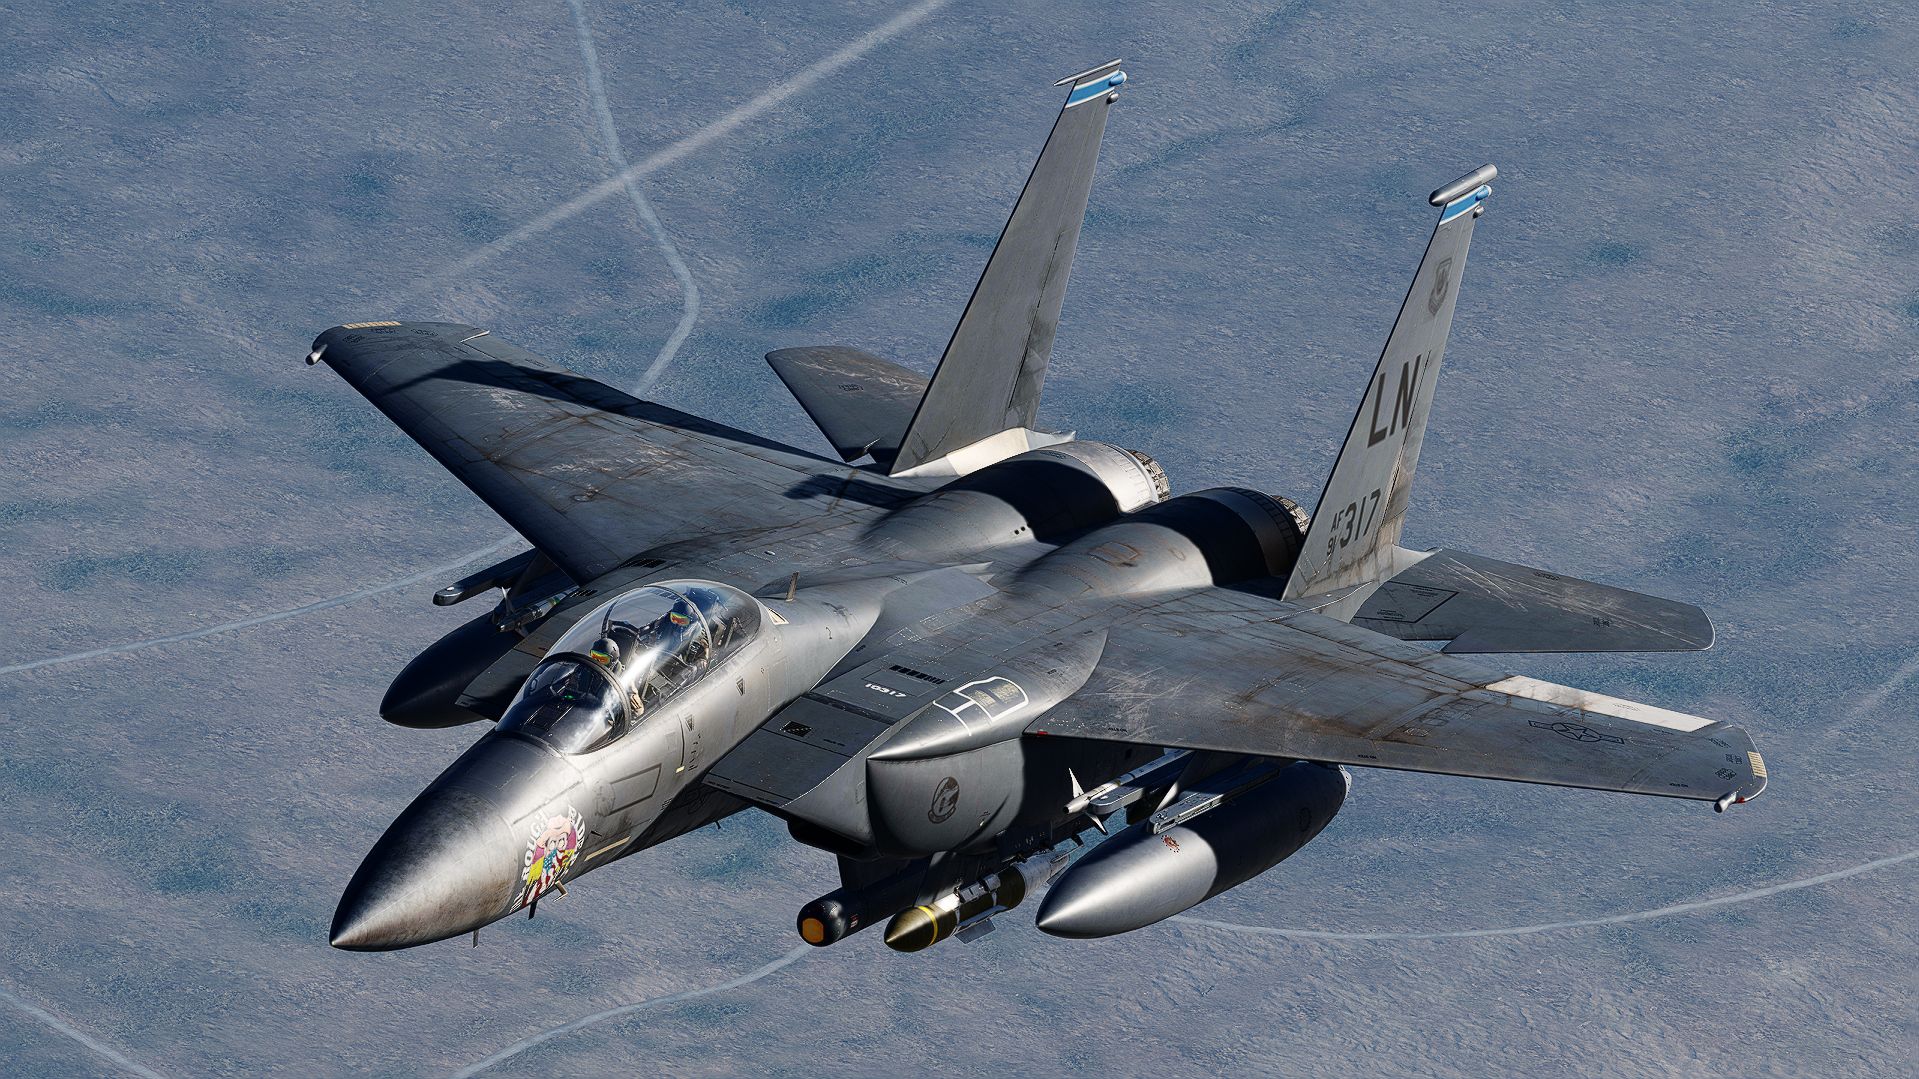 F-15E Strike eagle LN 91-317 "Roosevelt" (REOWORKED)